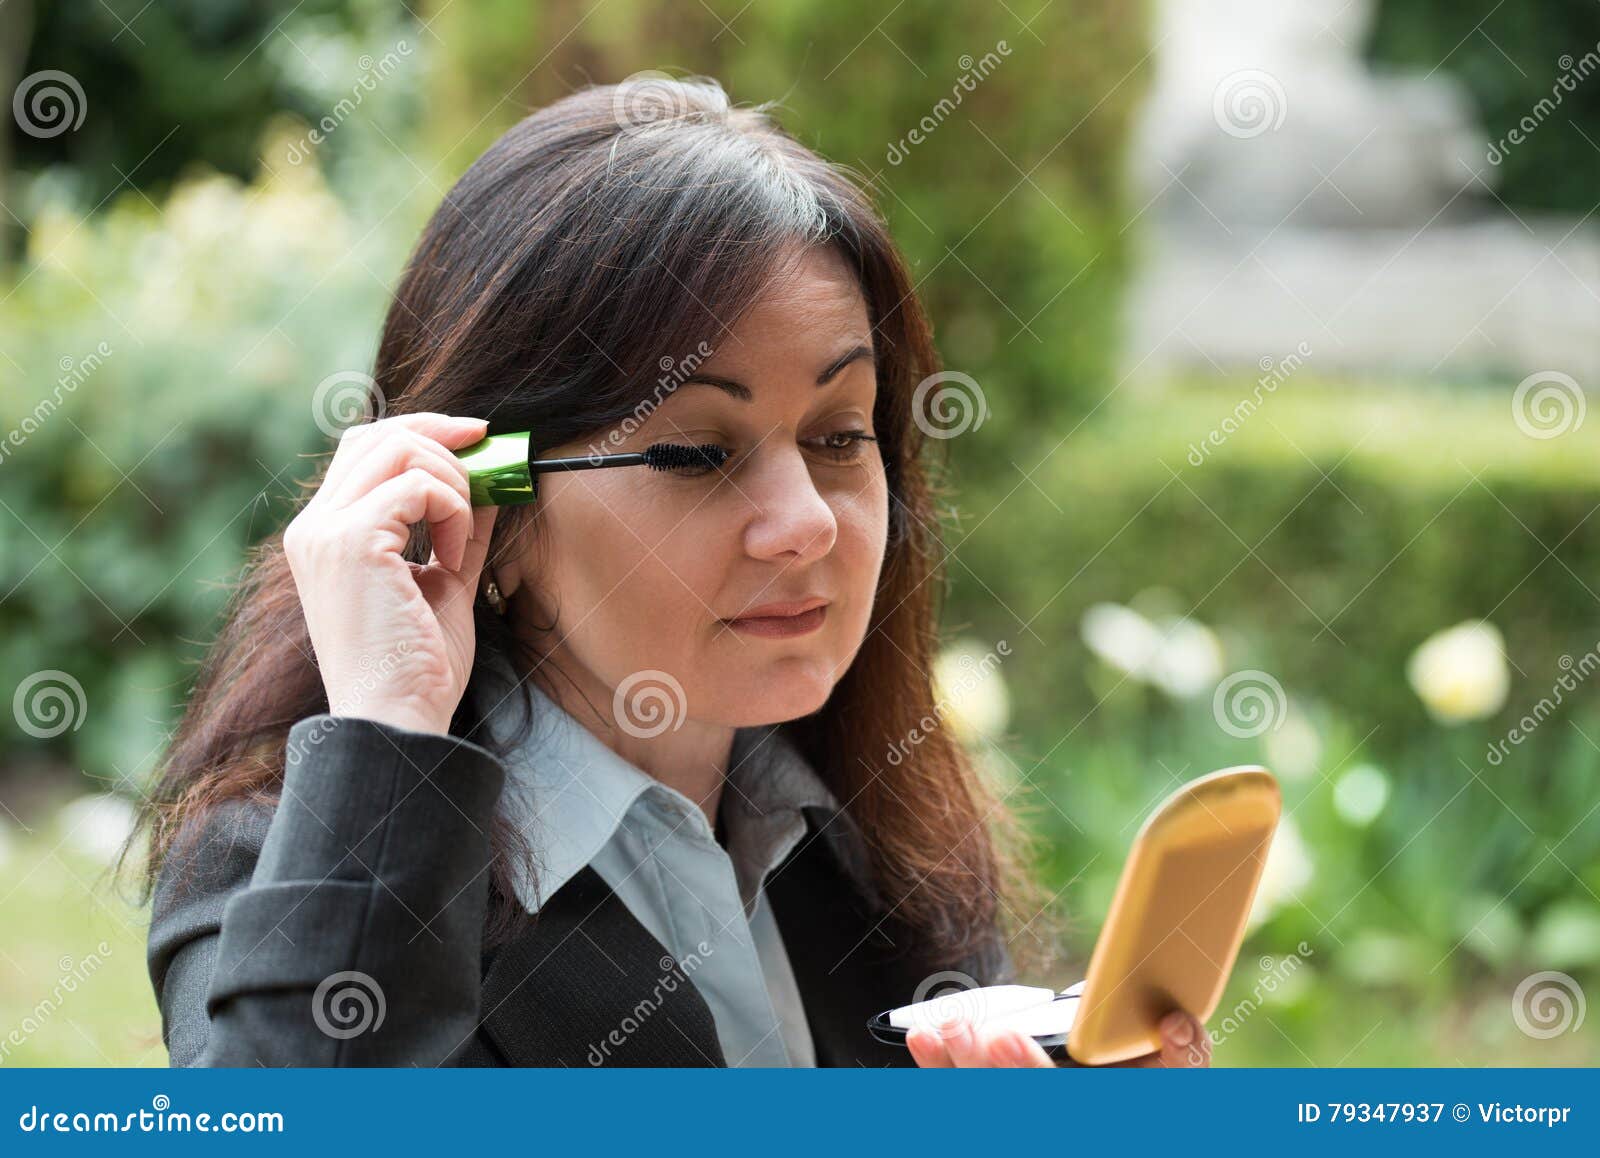 Woman Puts Make Up Stock Image Image Of Holding Makeup 79347937